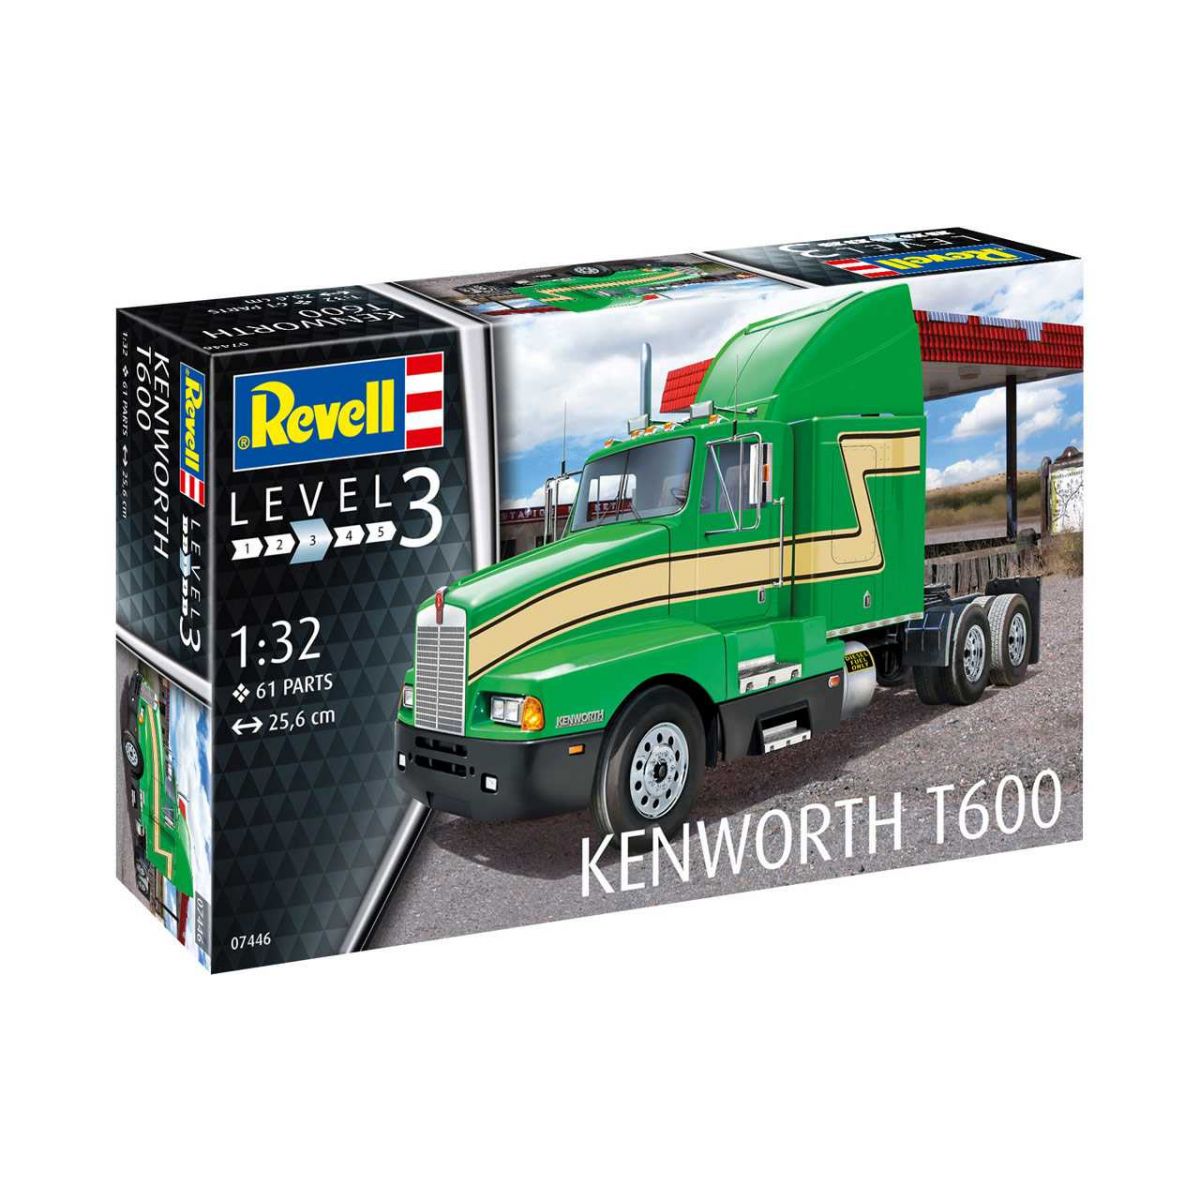 Plastikov model auta Kenworth T600 (1:32) - Revell 07446